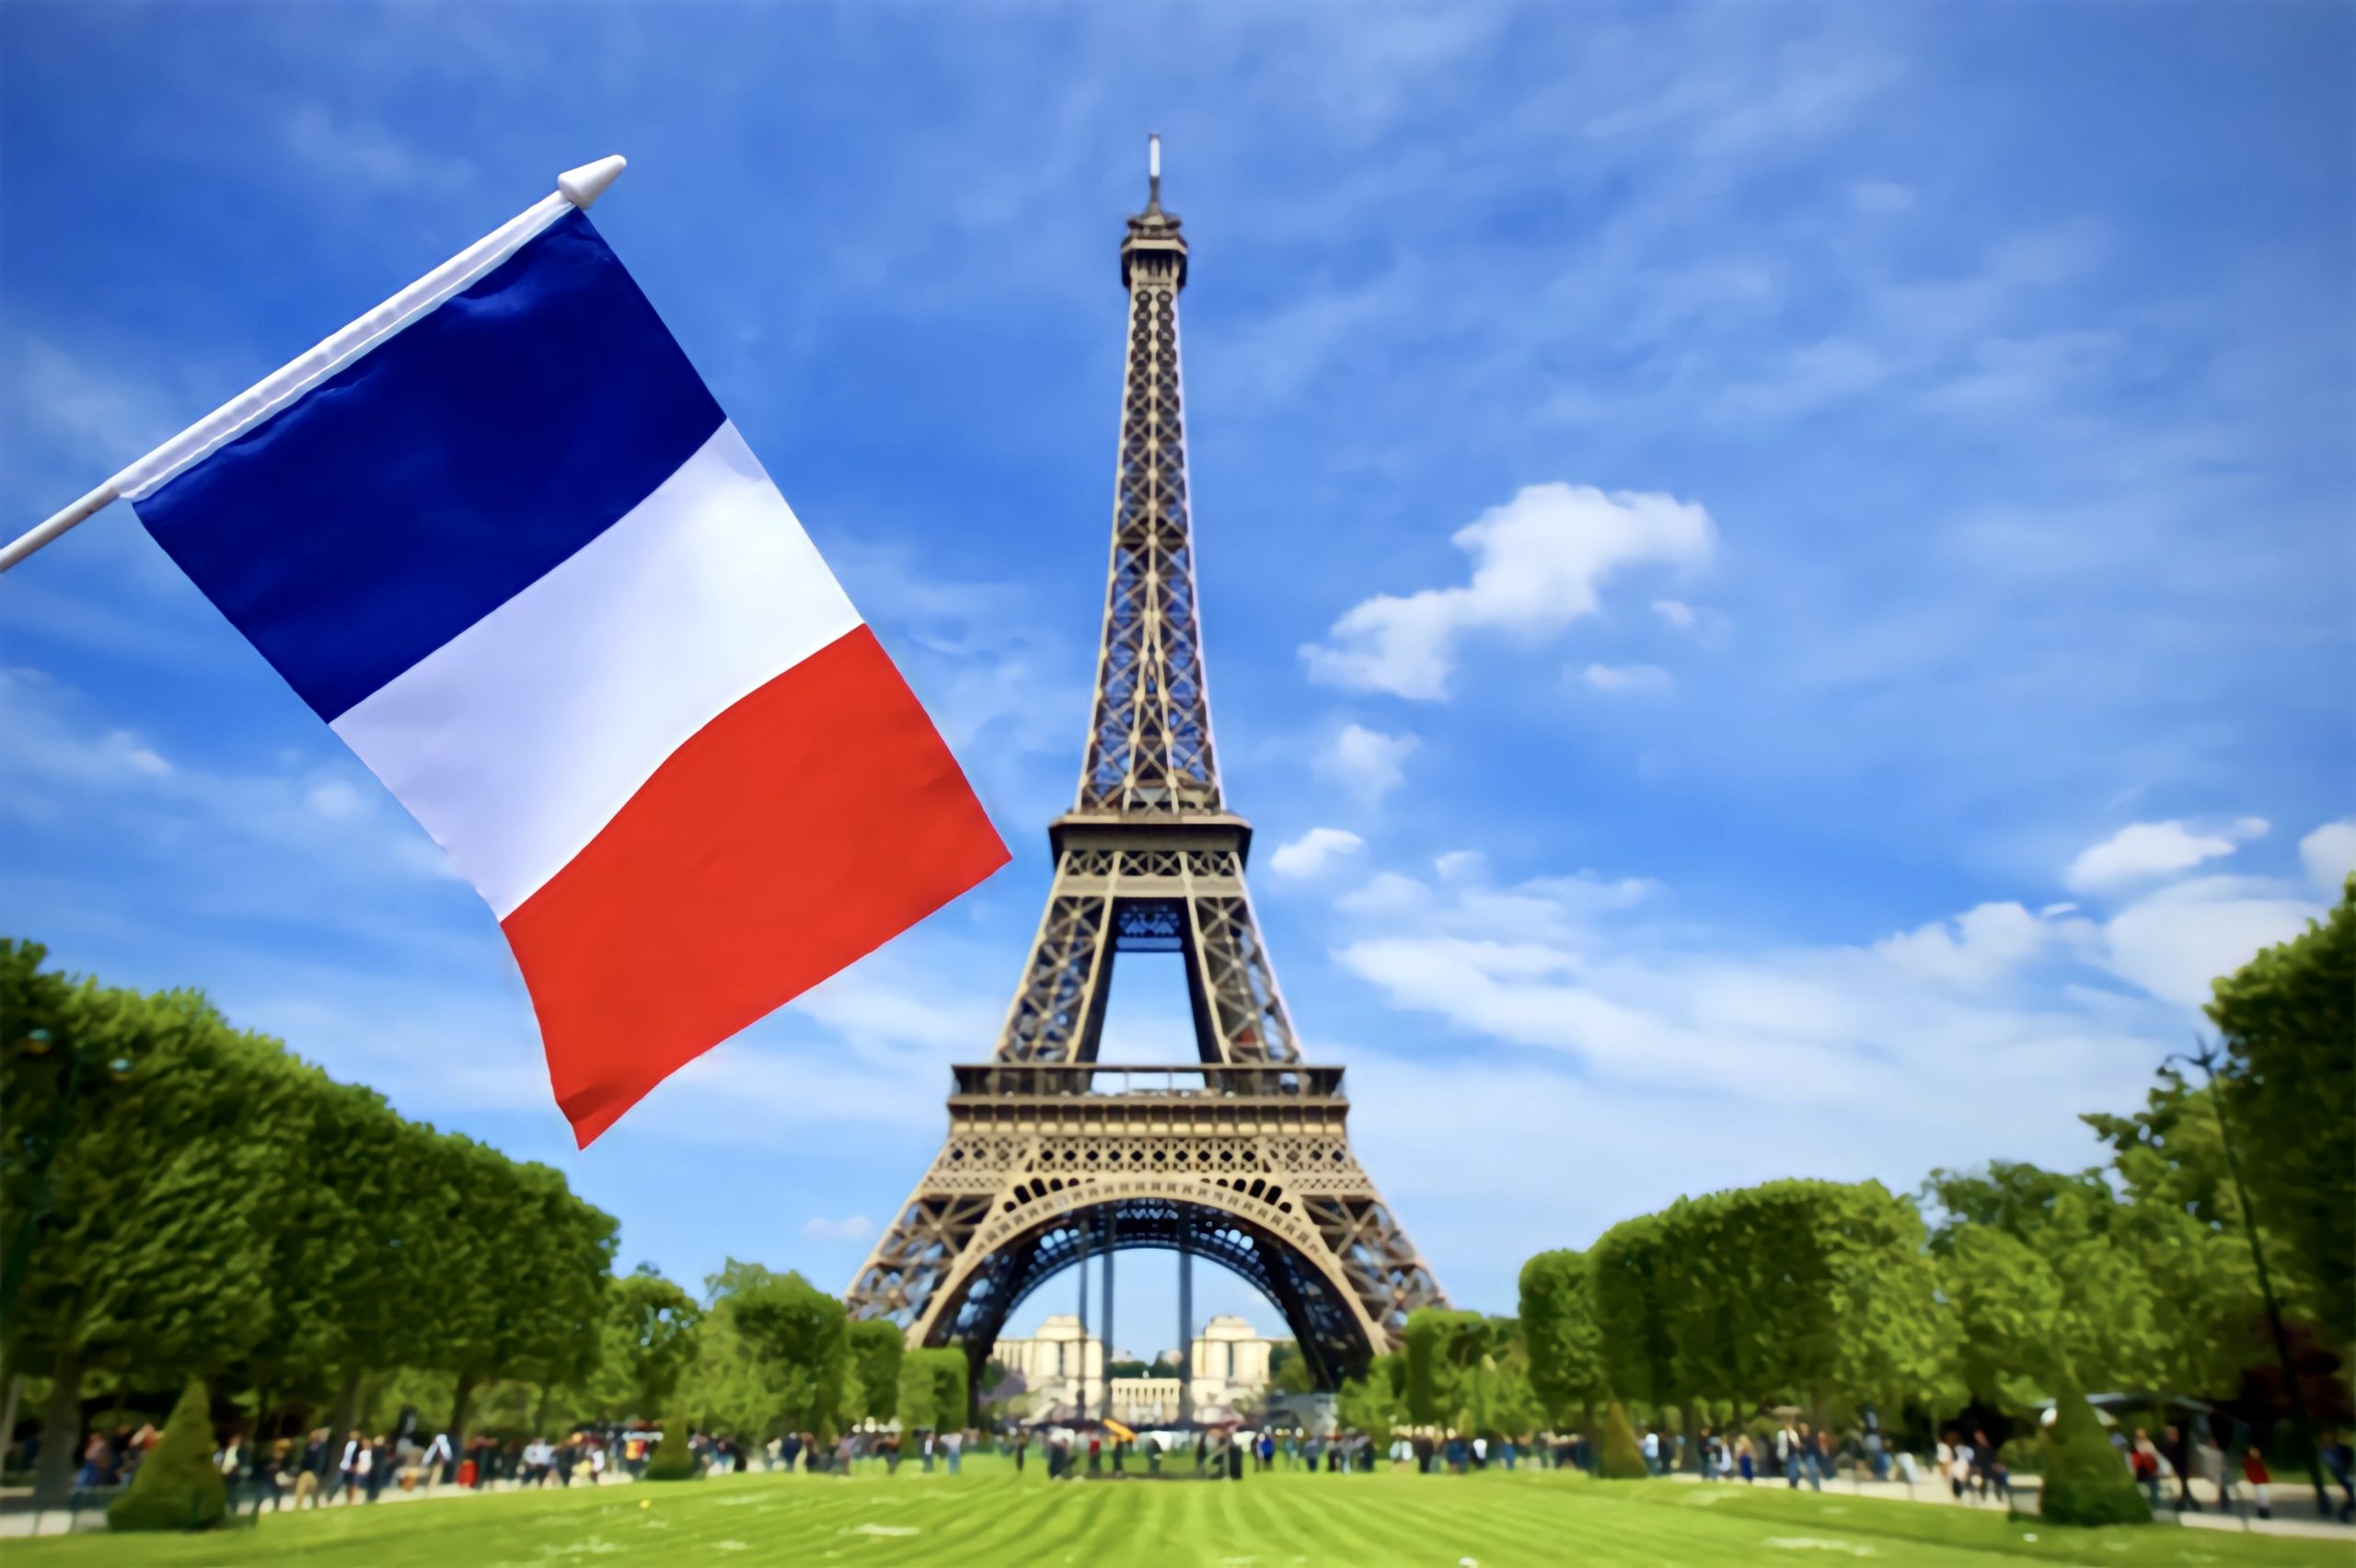 Урок 4 французского языка. Эйфель башня с флагом. Флаг Парижа Франции. Эльфиева башня с флагом Франции. Символы Парижа и Франции.